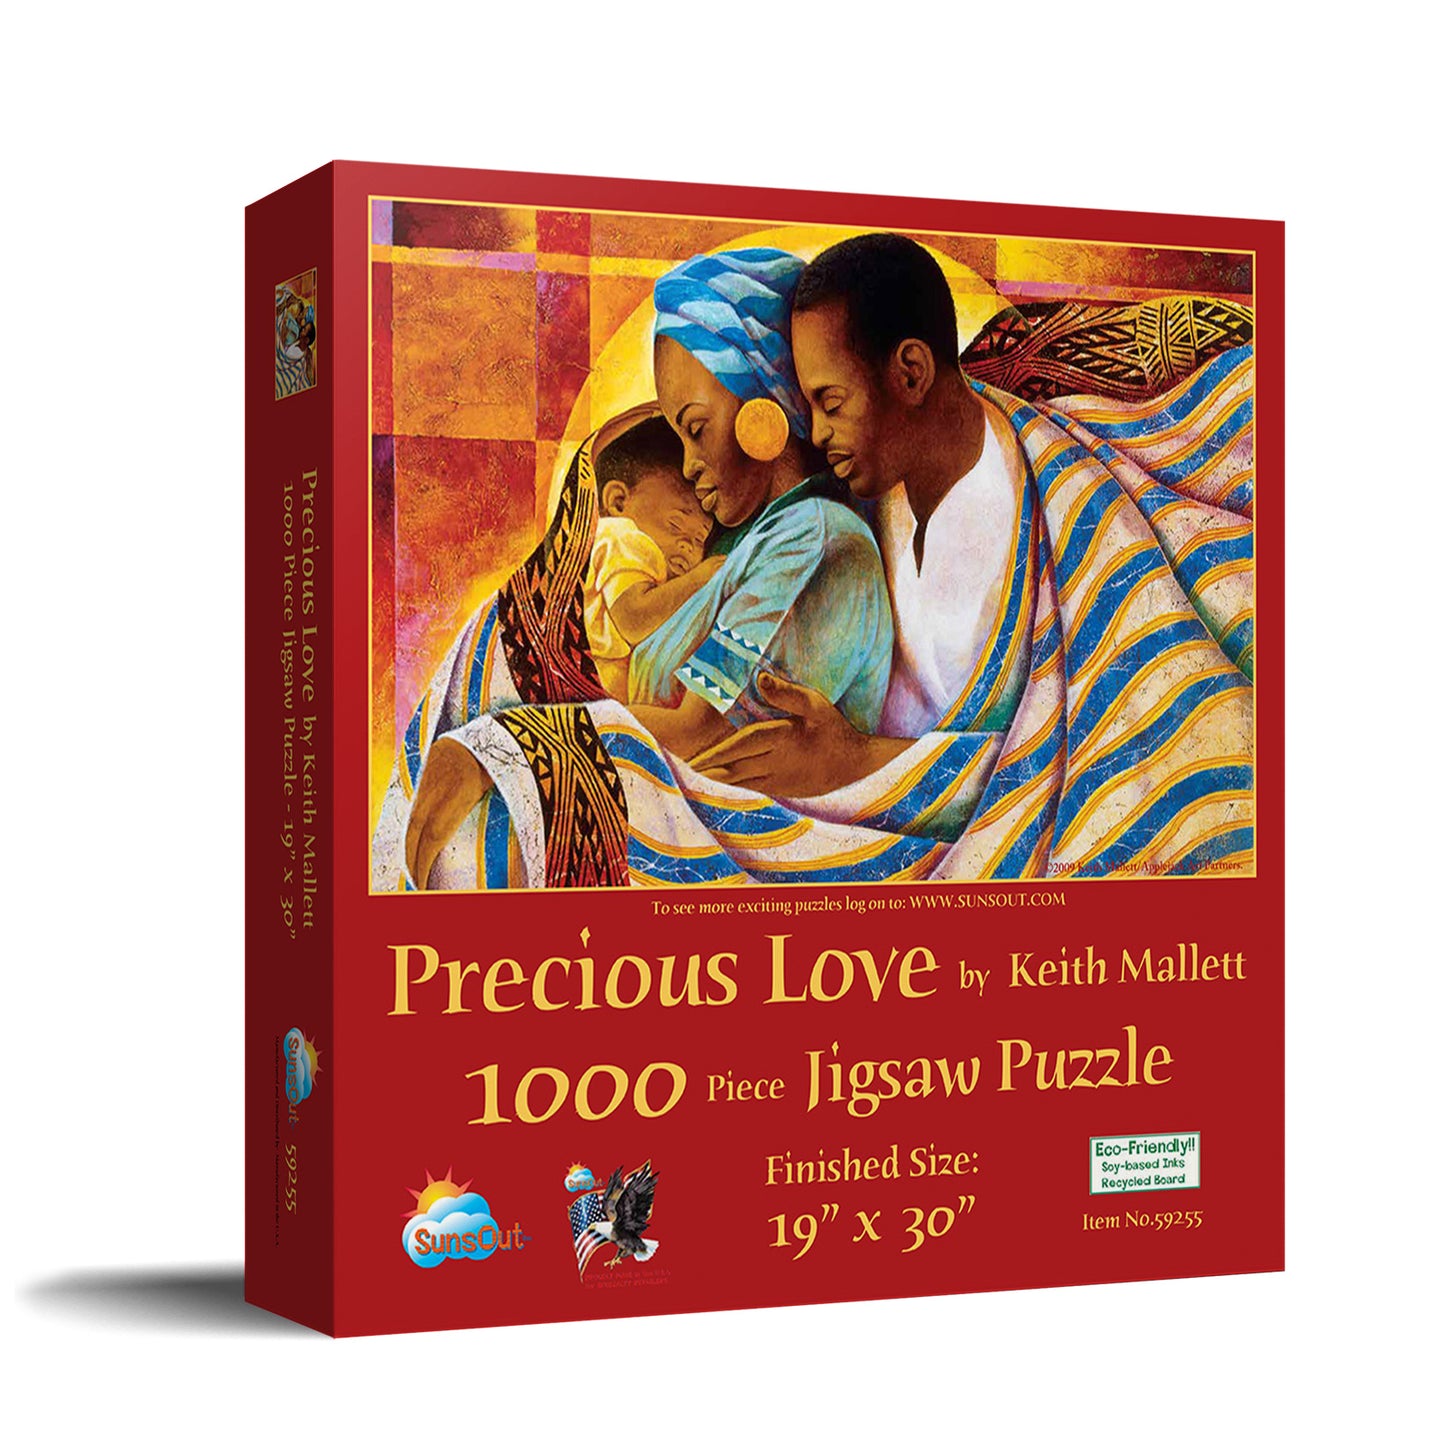 Precious Love - 1000 Piece Jigsaw Puzzle